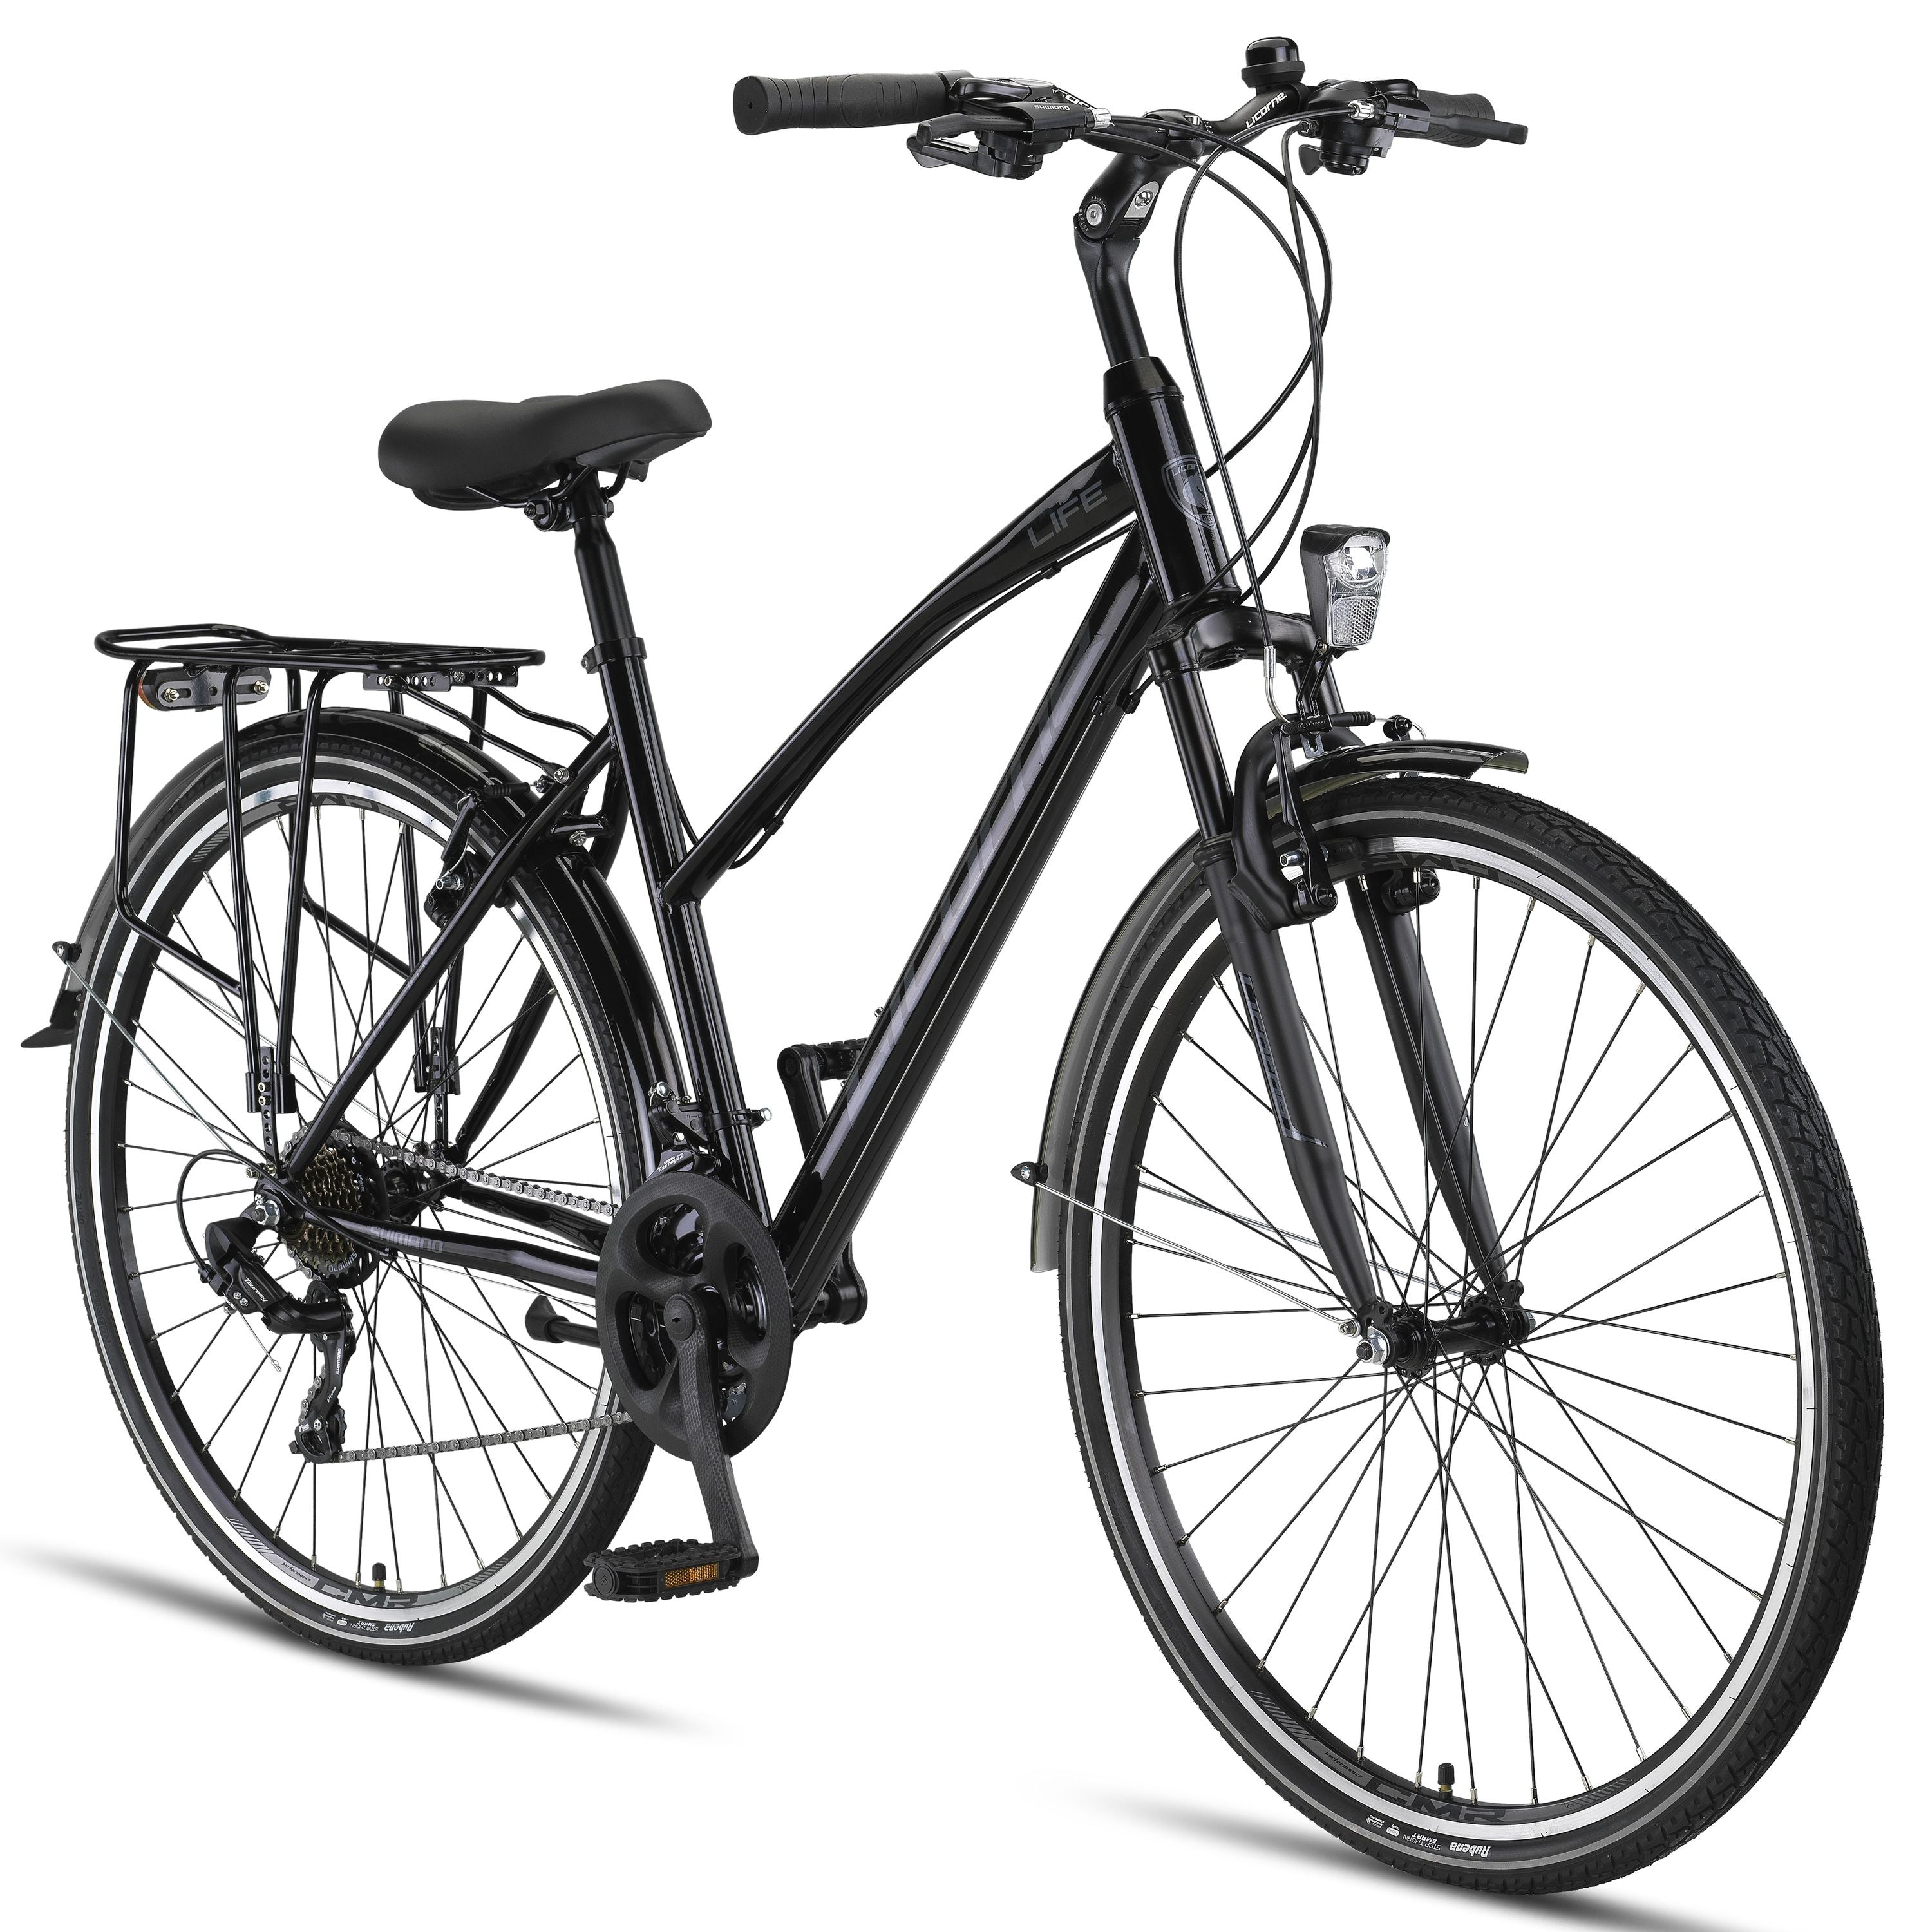 Licorne Bike L-V-ATB Premium Trekking Bike in 28 inch - Bicycle for men, boys, girls and ladies - Shimano 21 speed shifting - Citybike - Men's bike